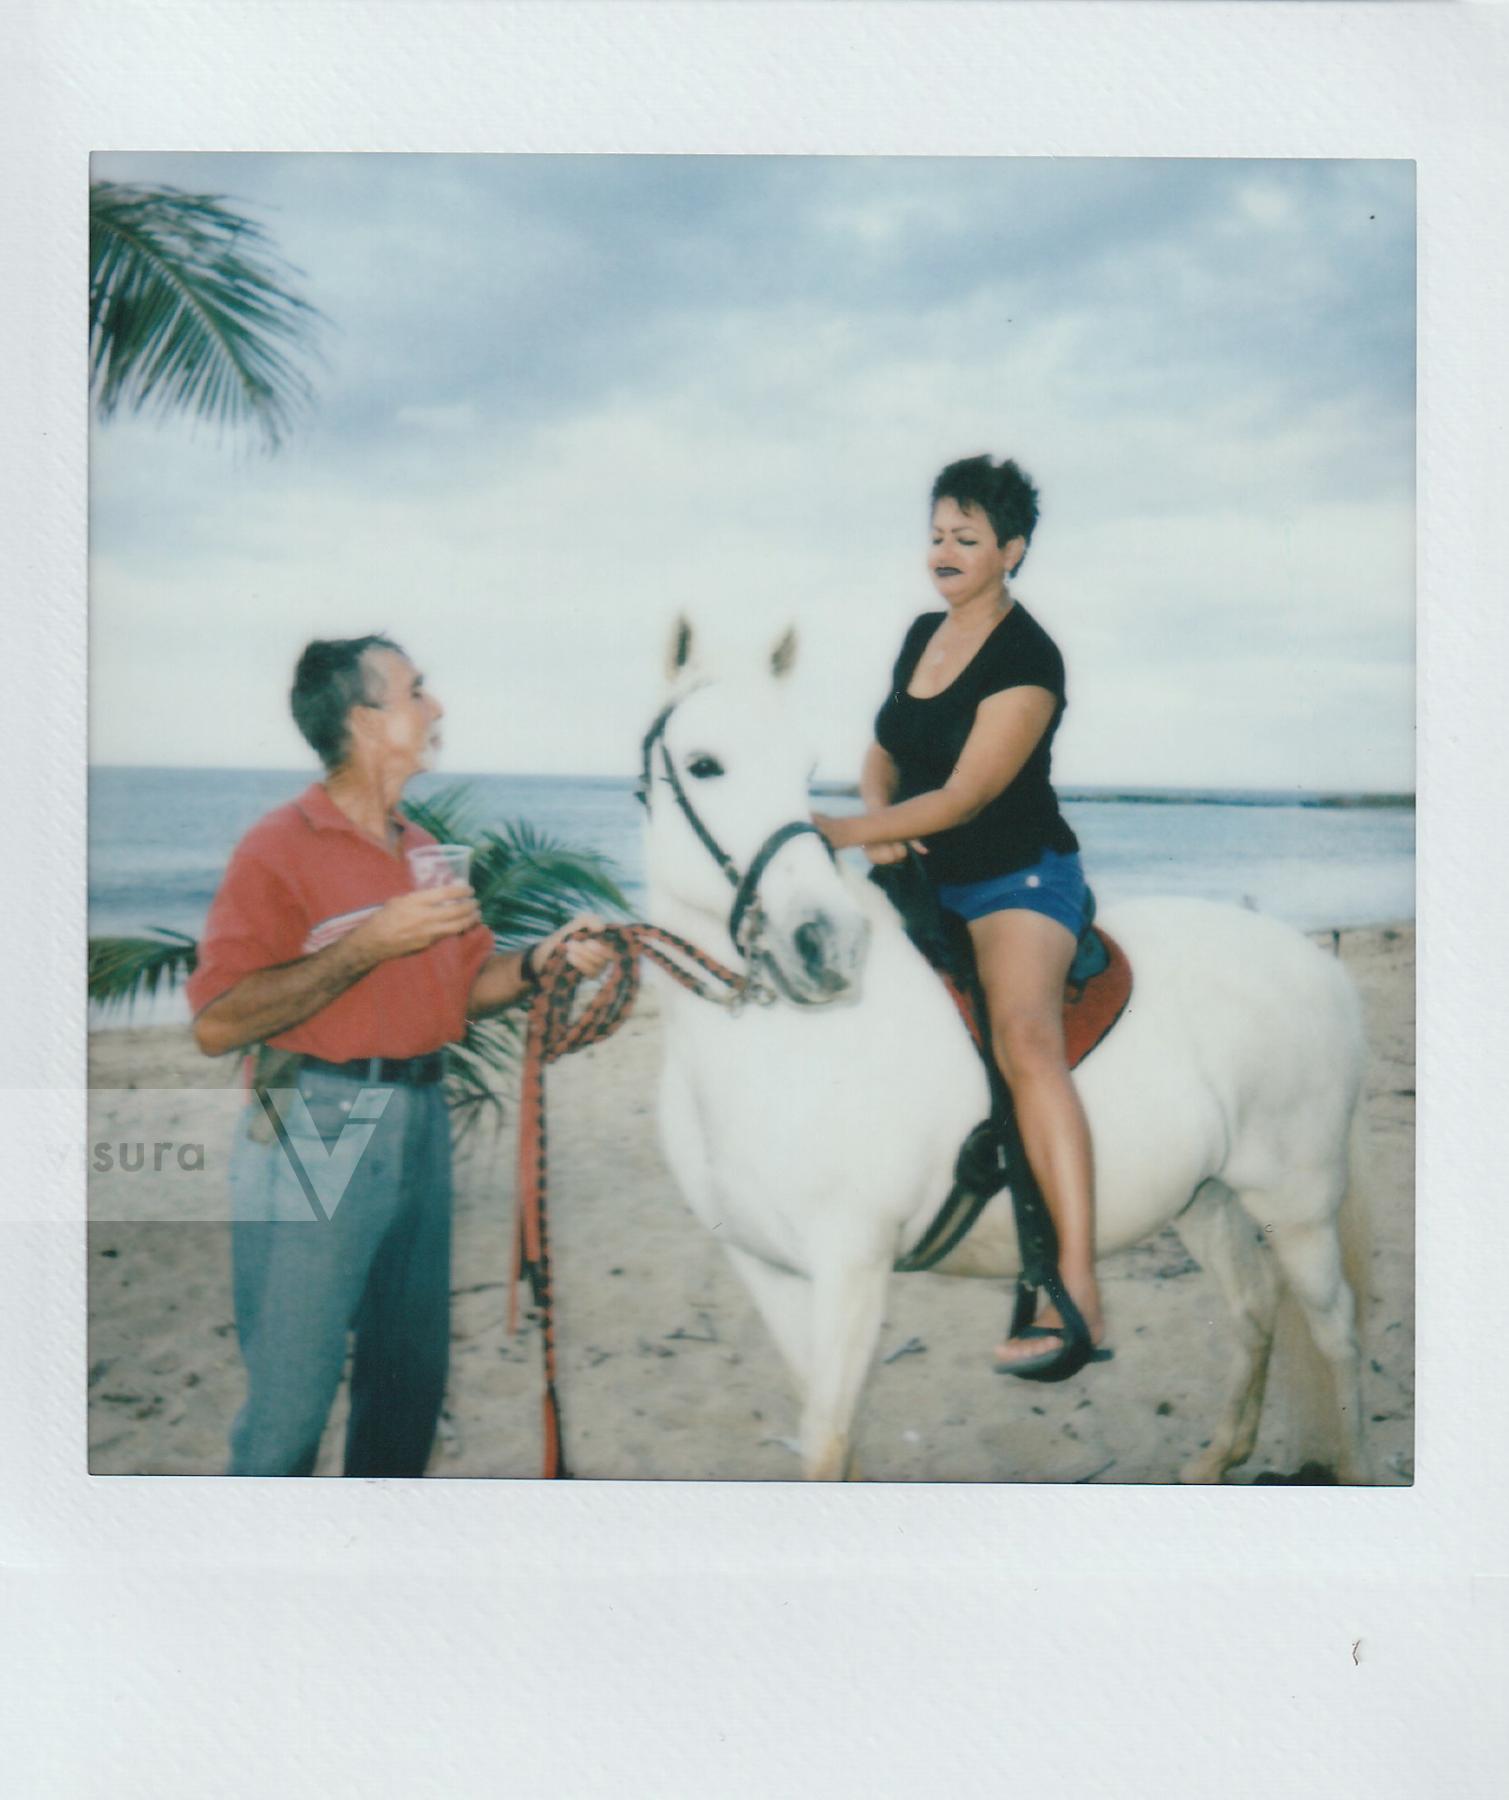 Purchase Horse tour by Gabriella N. Báez